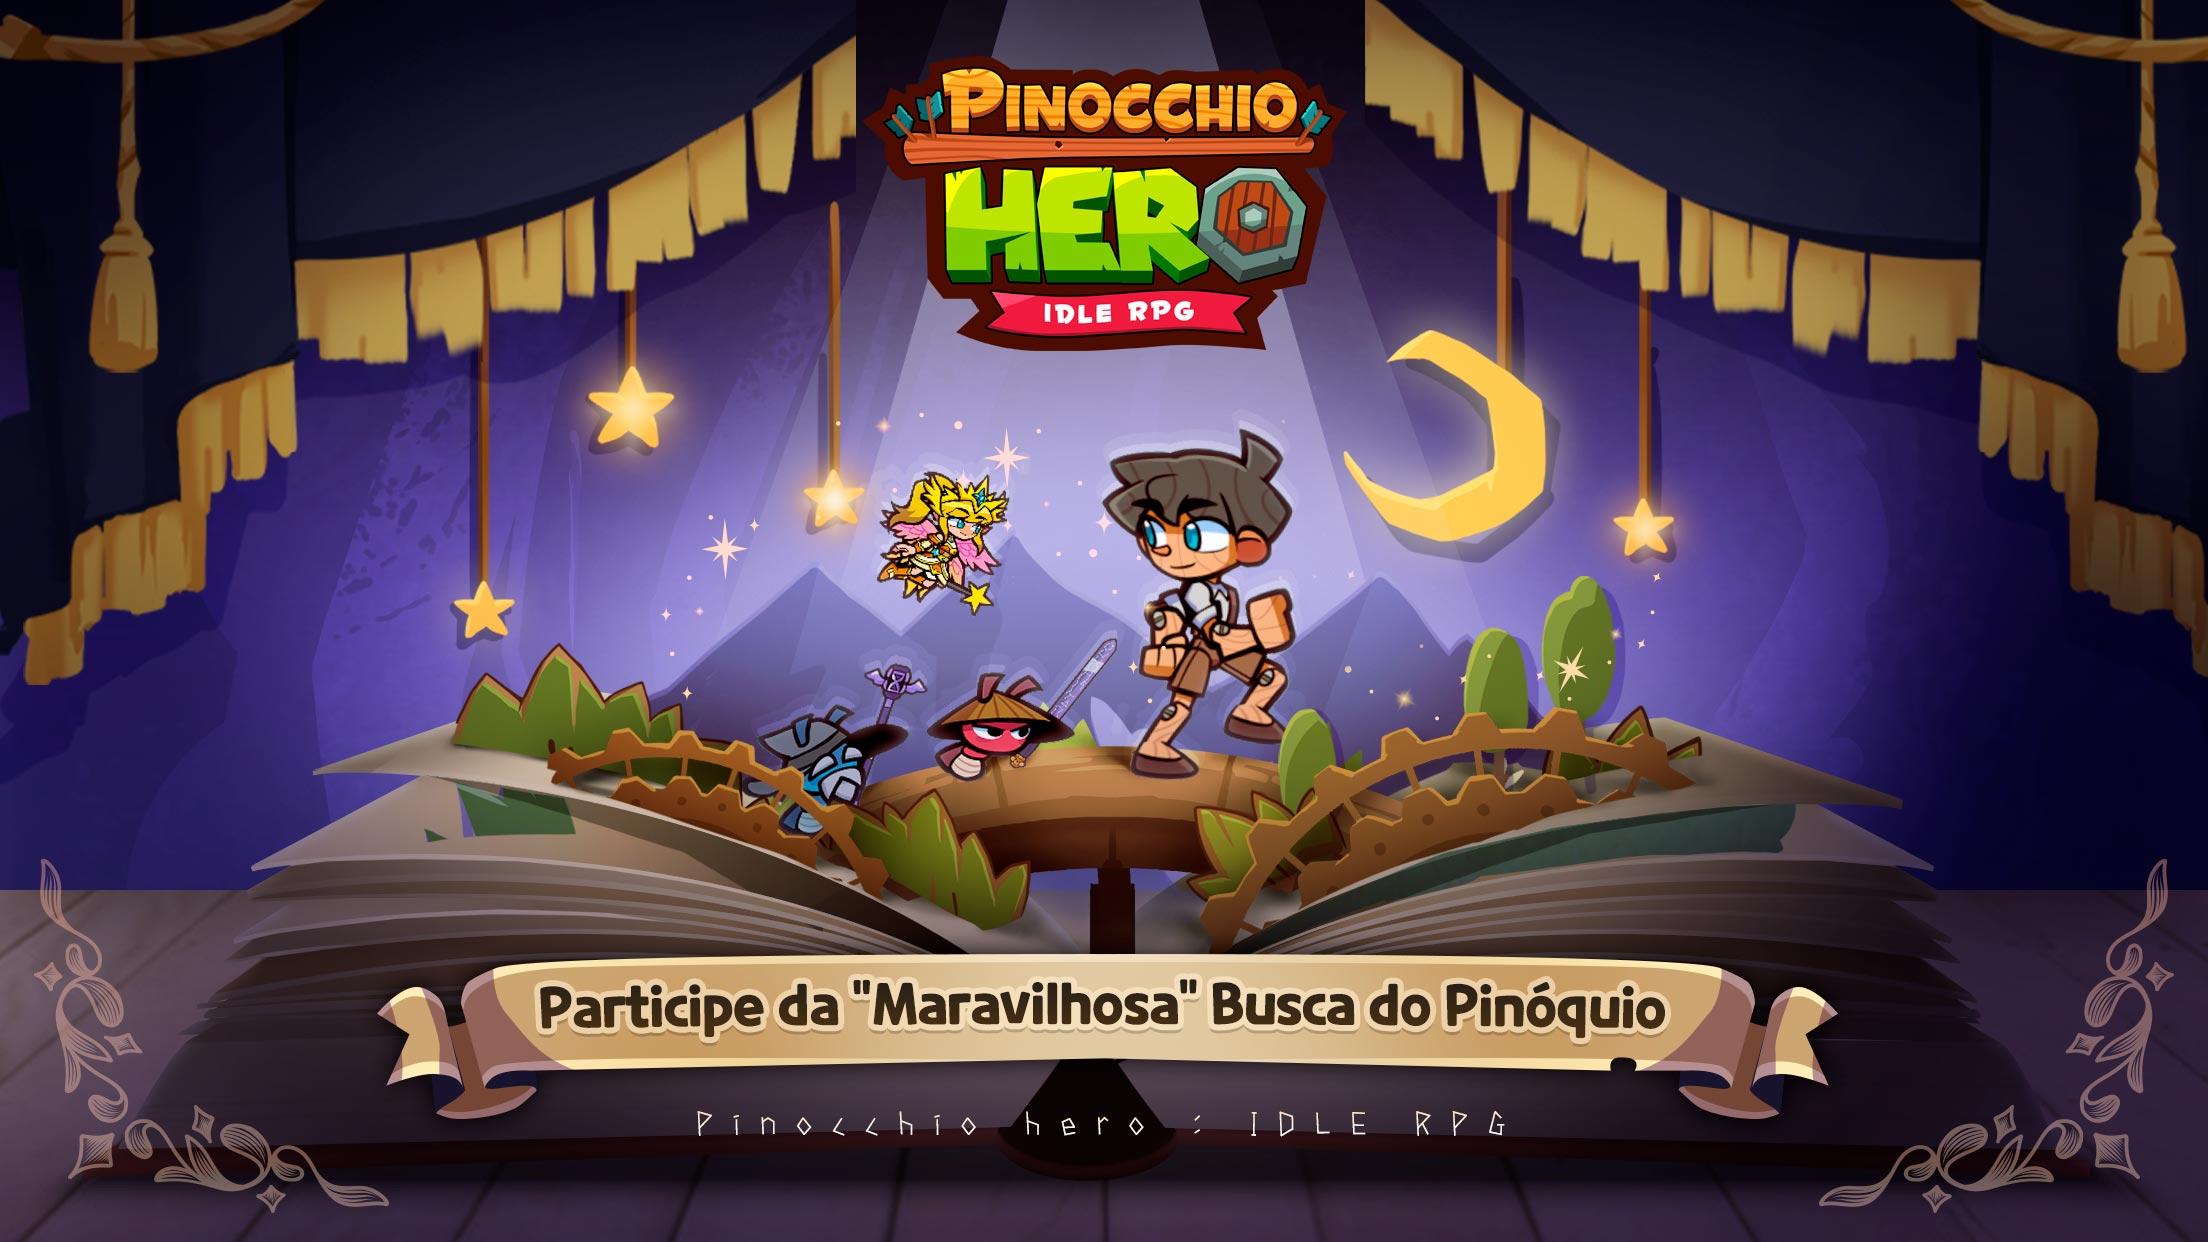 Screenshot 1 of Pinocchio Herói RPG IDLE 1.0.10